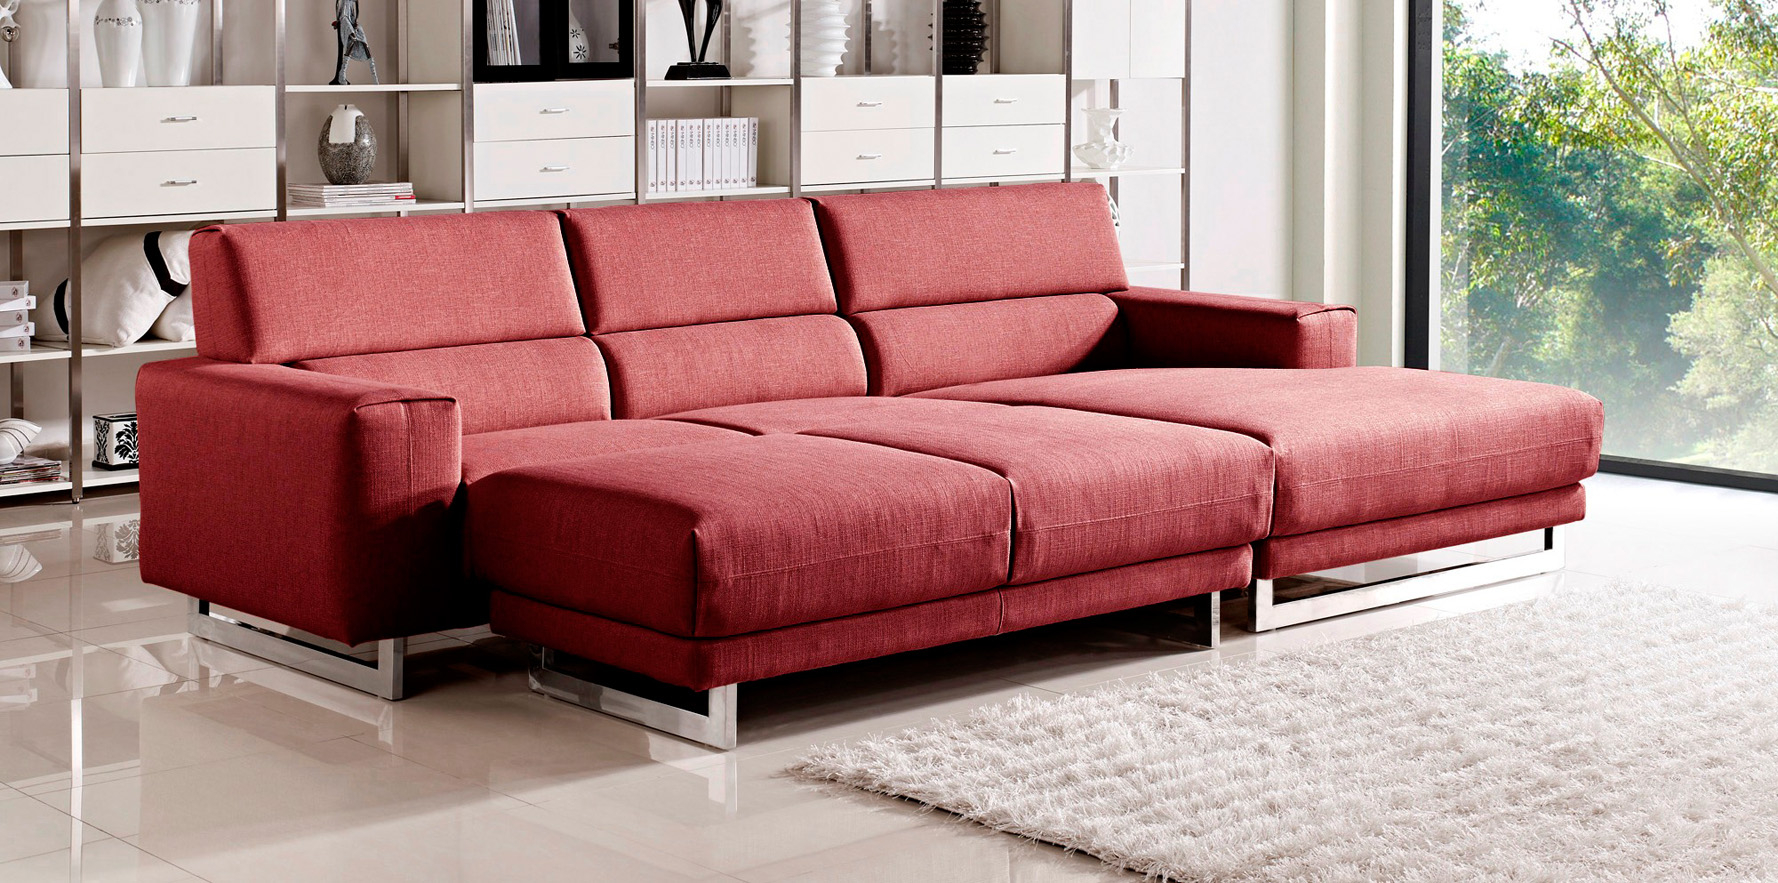 Red fabric diva sectional sofa with sleeper ottoman zuri furniture